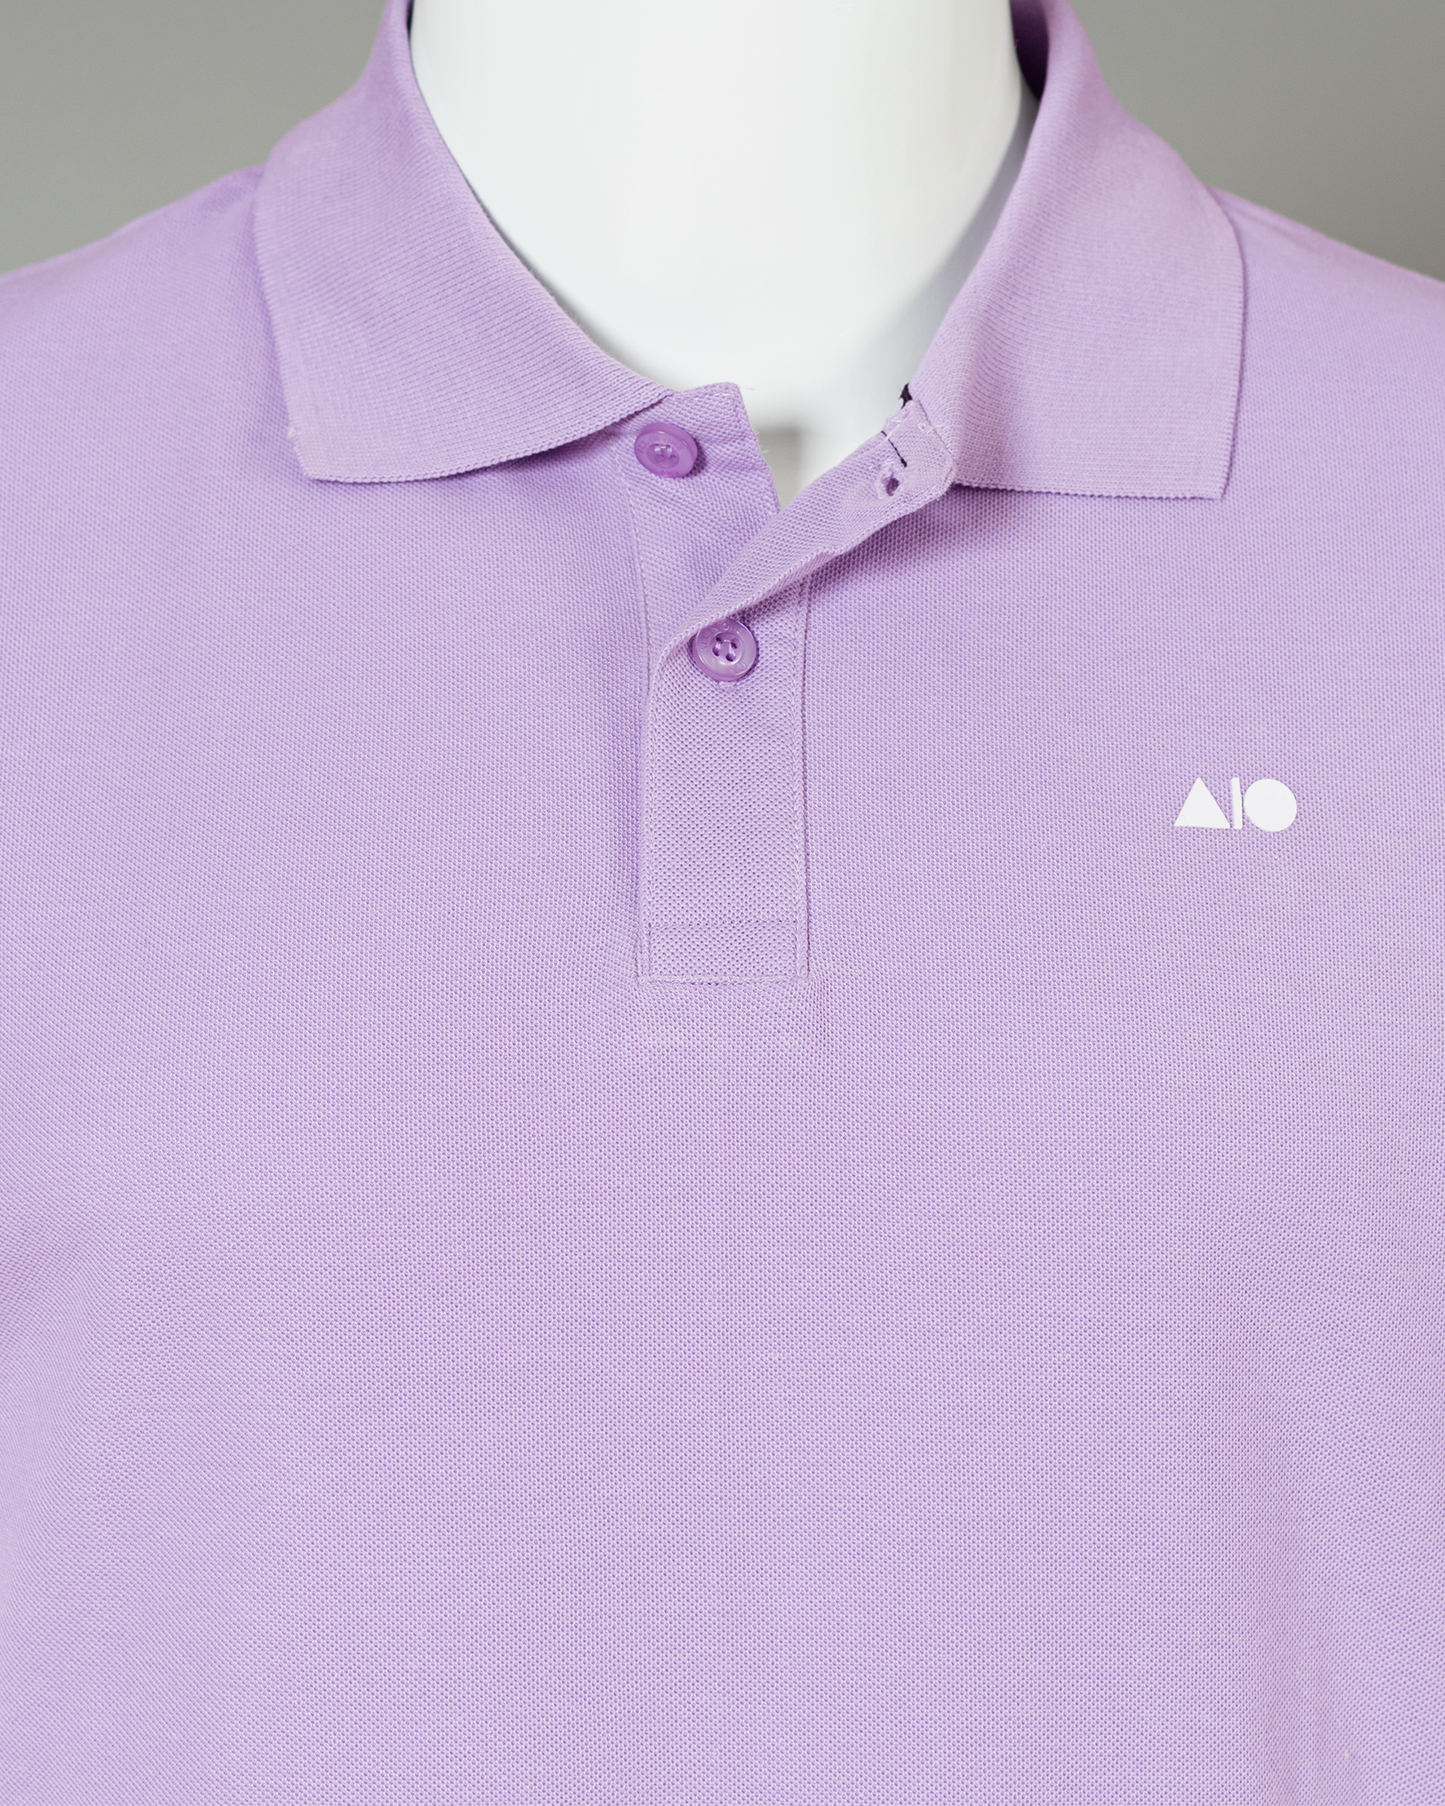 Mens Basic Polo Shirt - Combo (Purple Rose, Teal Blue & Maroon)